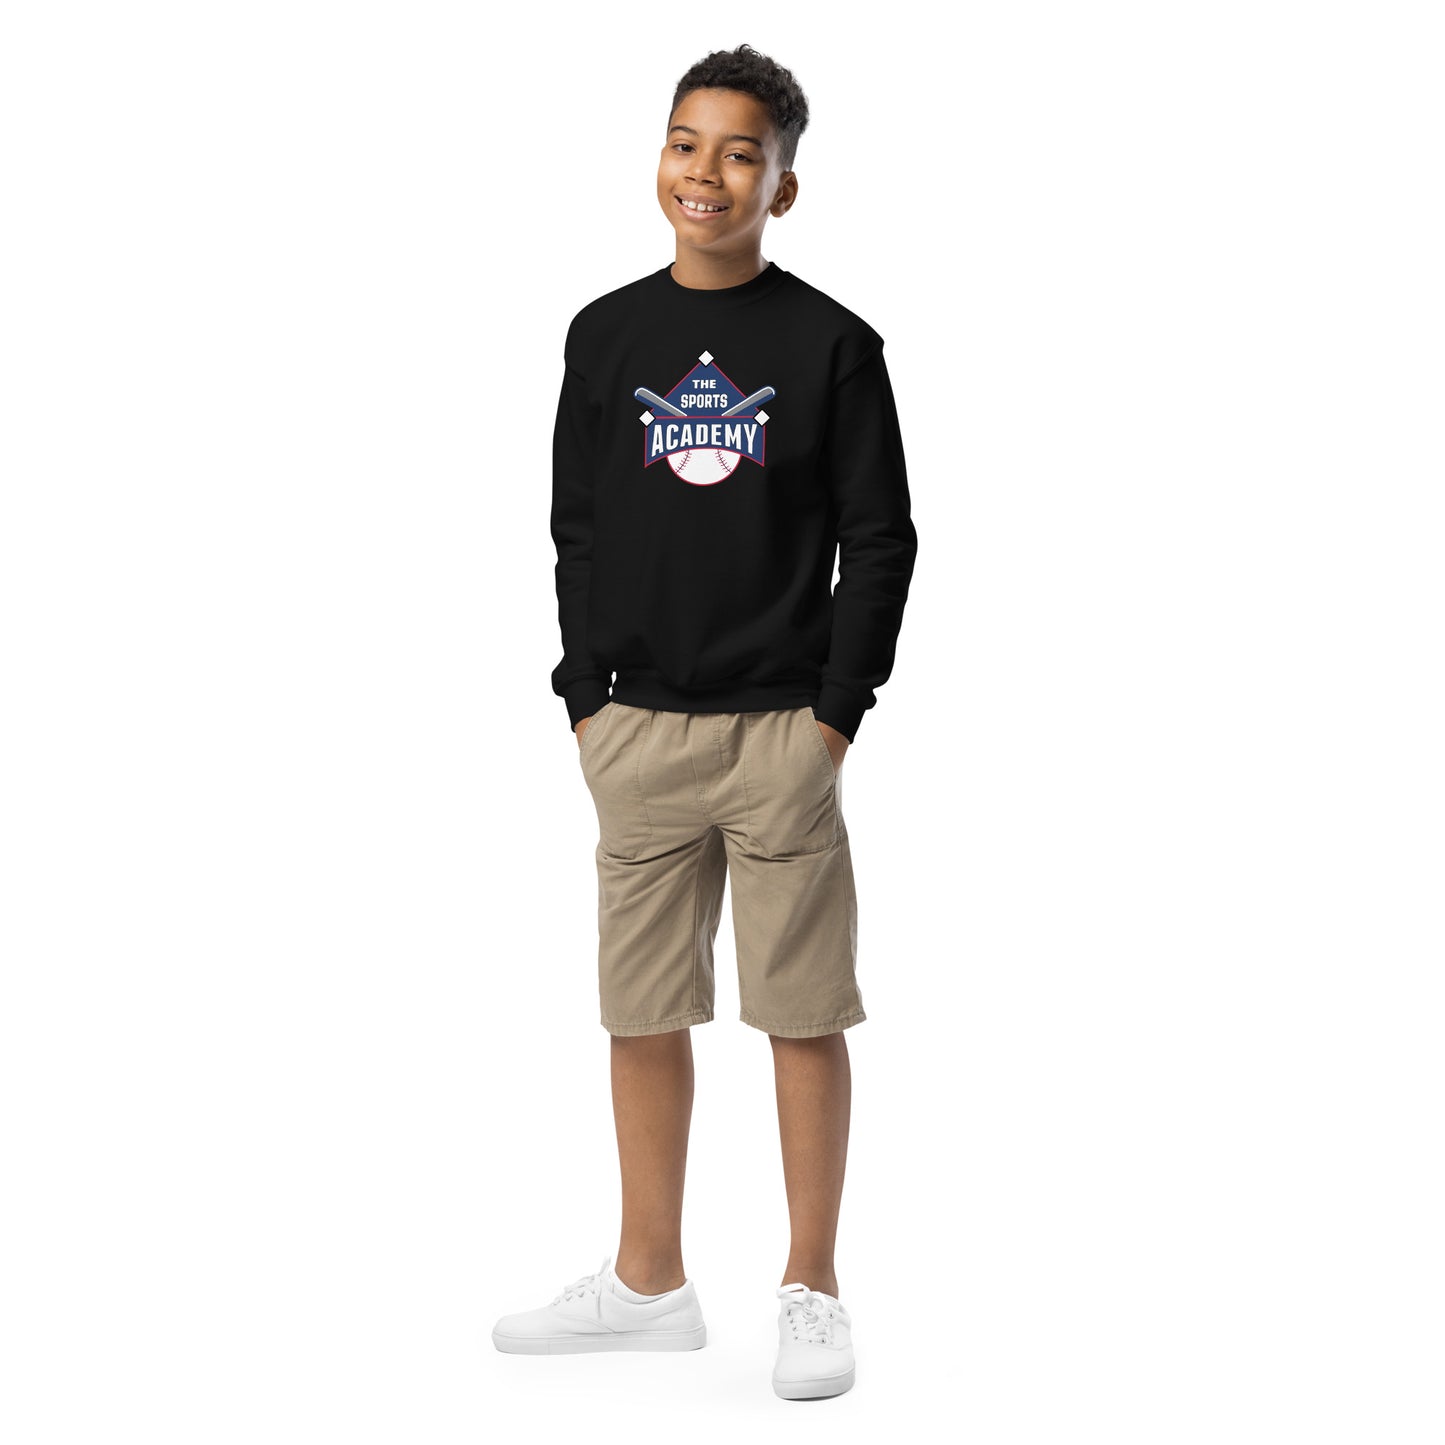 The Sports Academy Youth crewneck sweatshirt